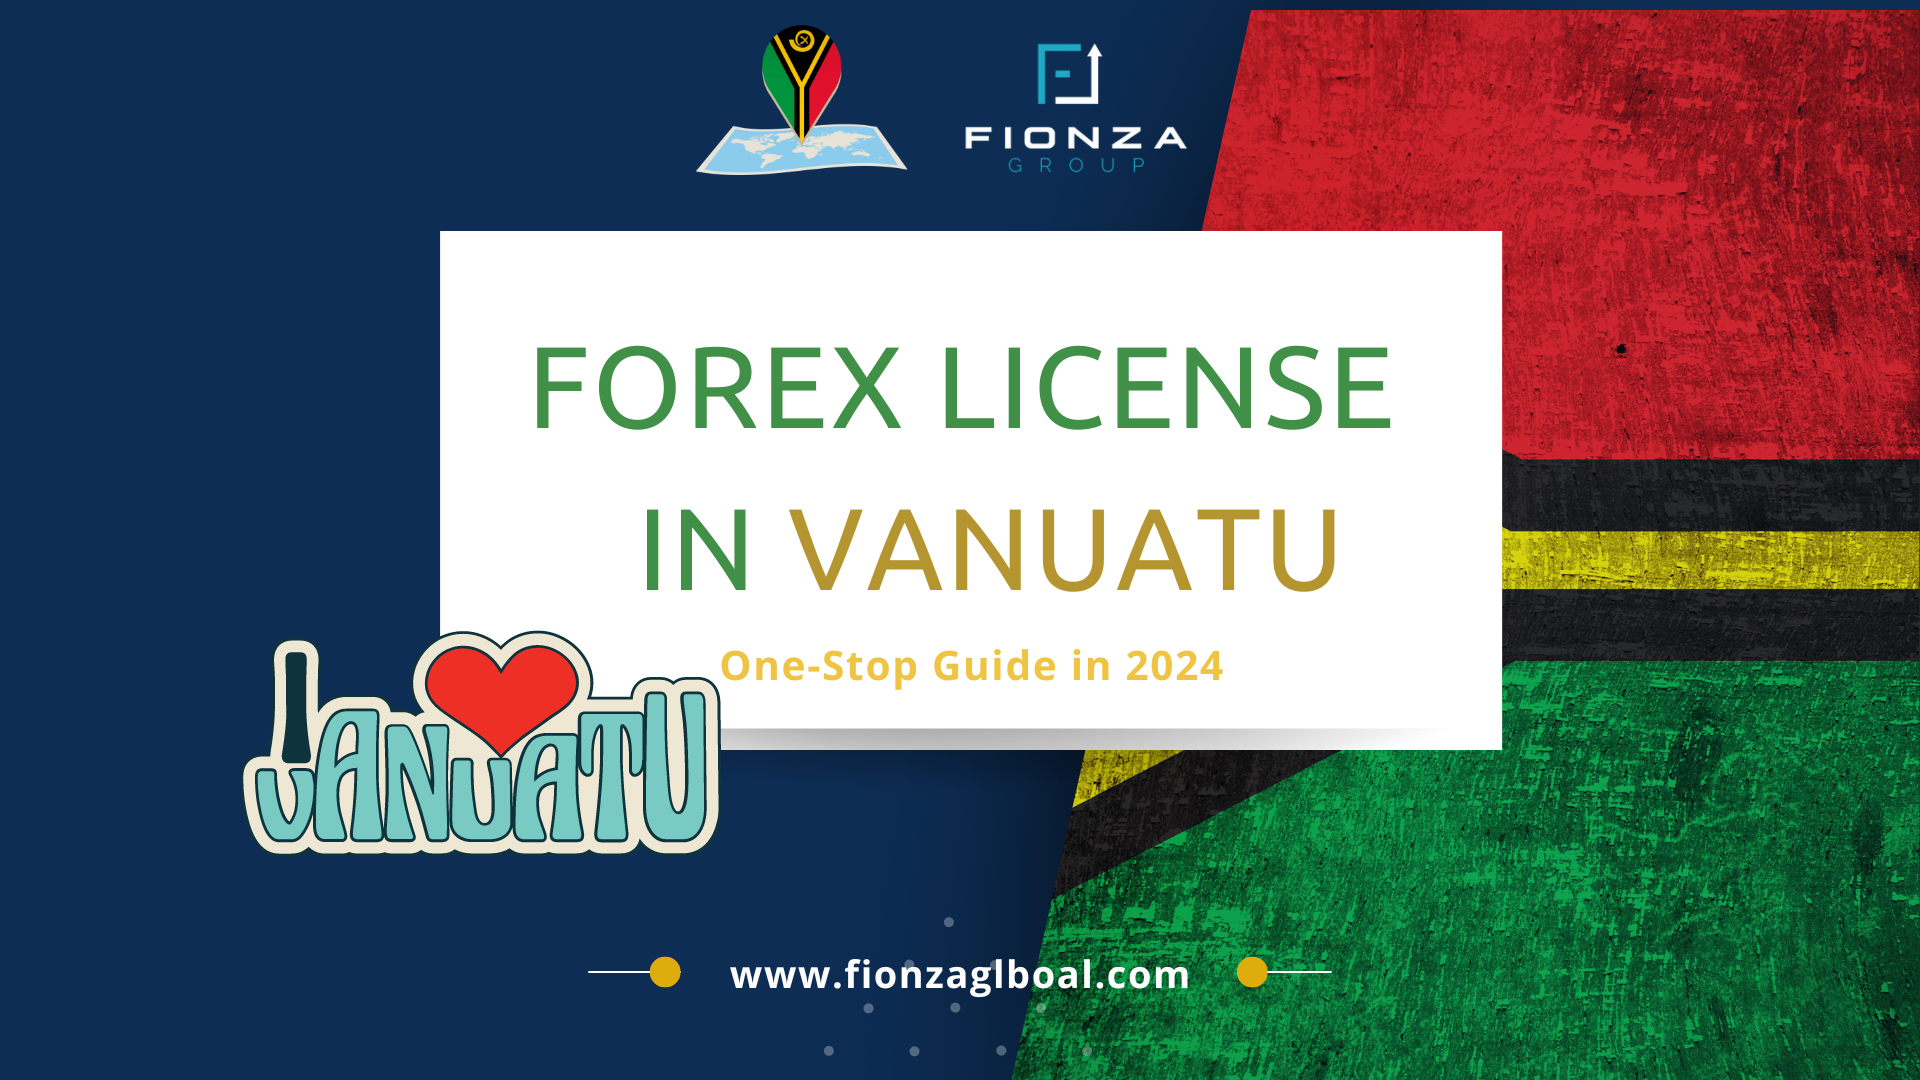 Forex License In Vanuatu: Attractive Benefits For Financial Companies